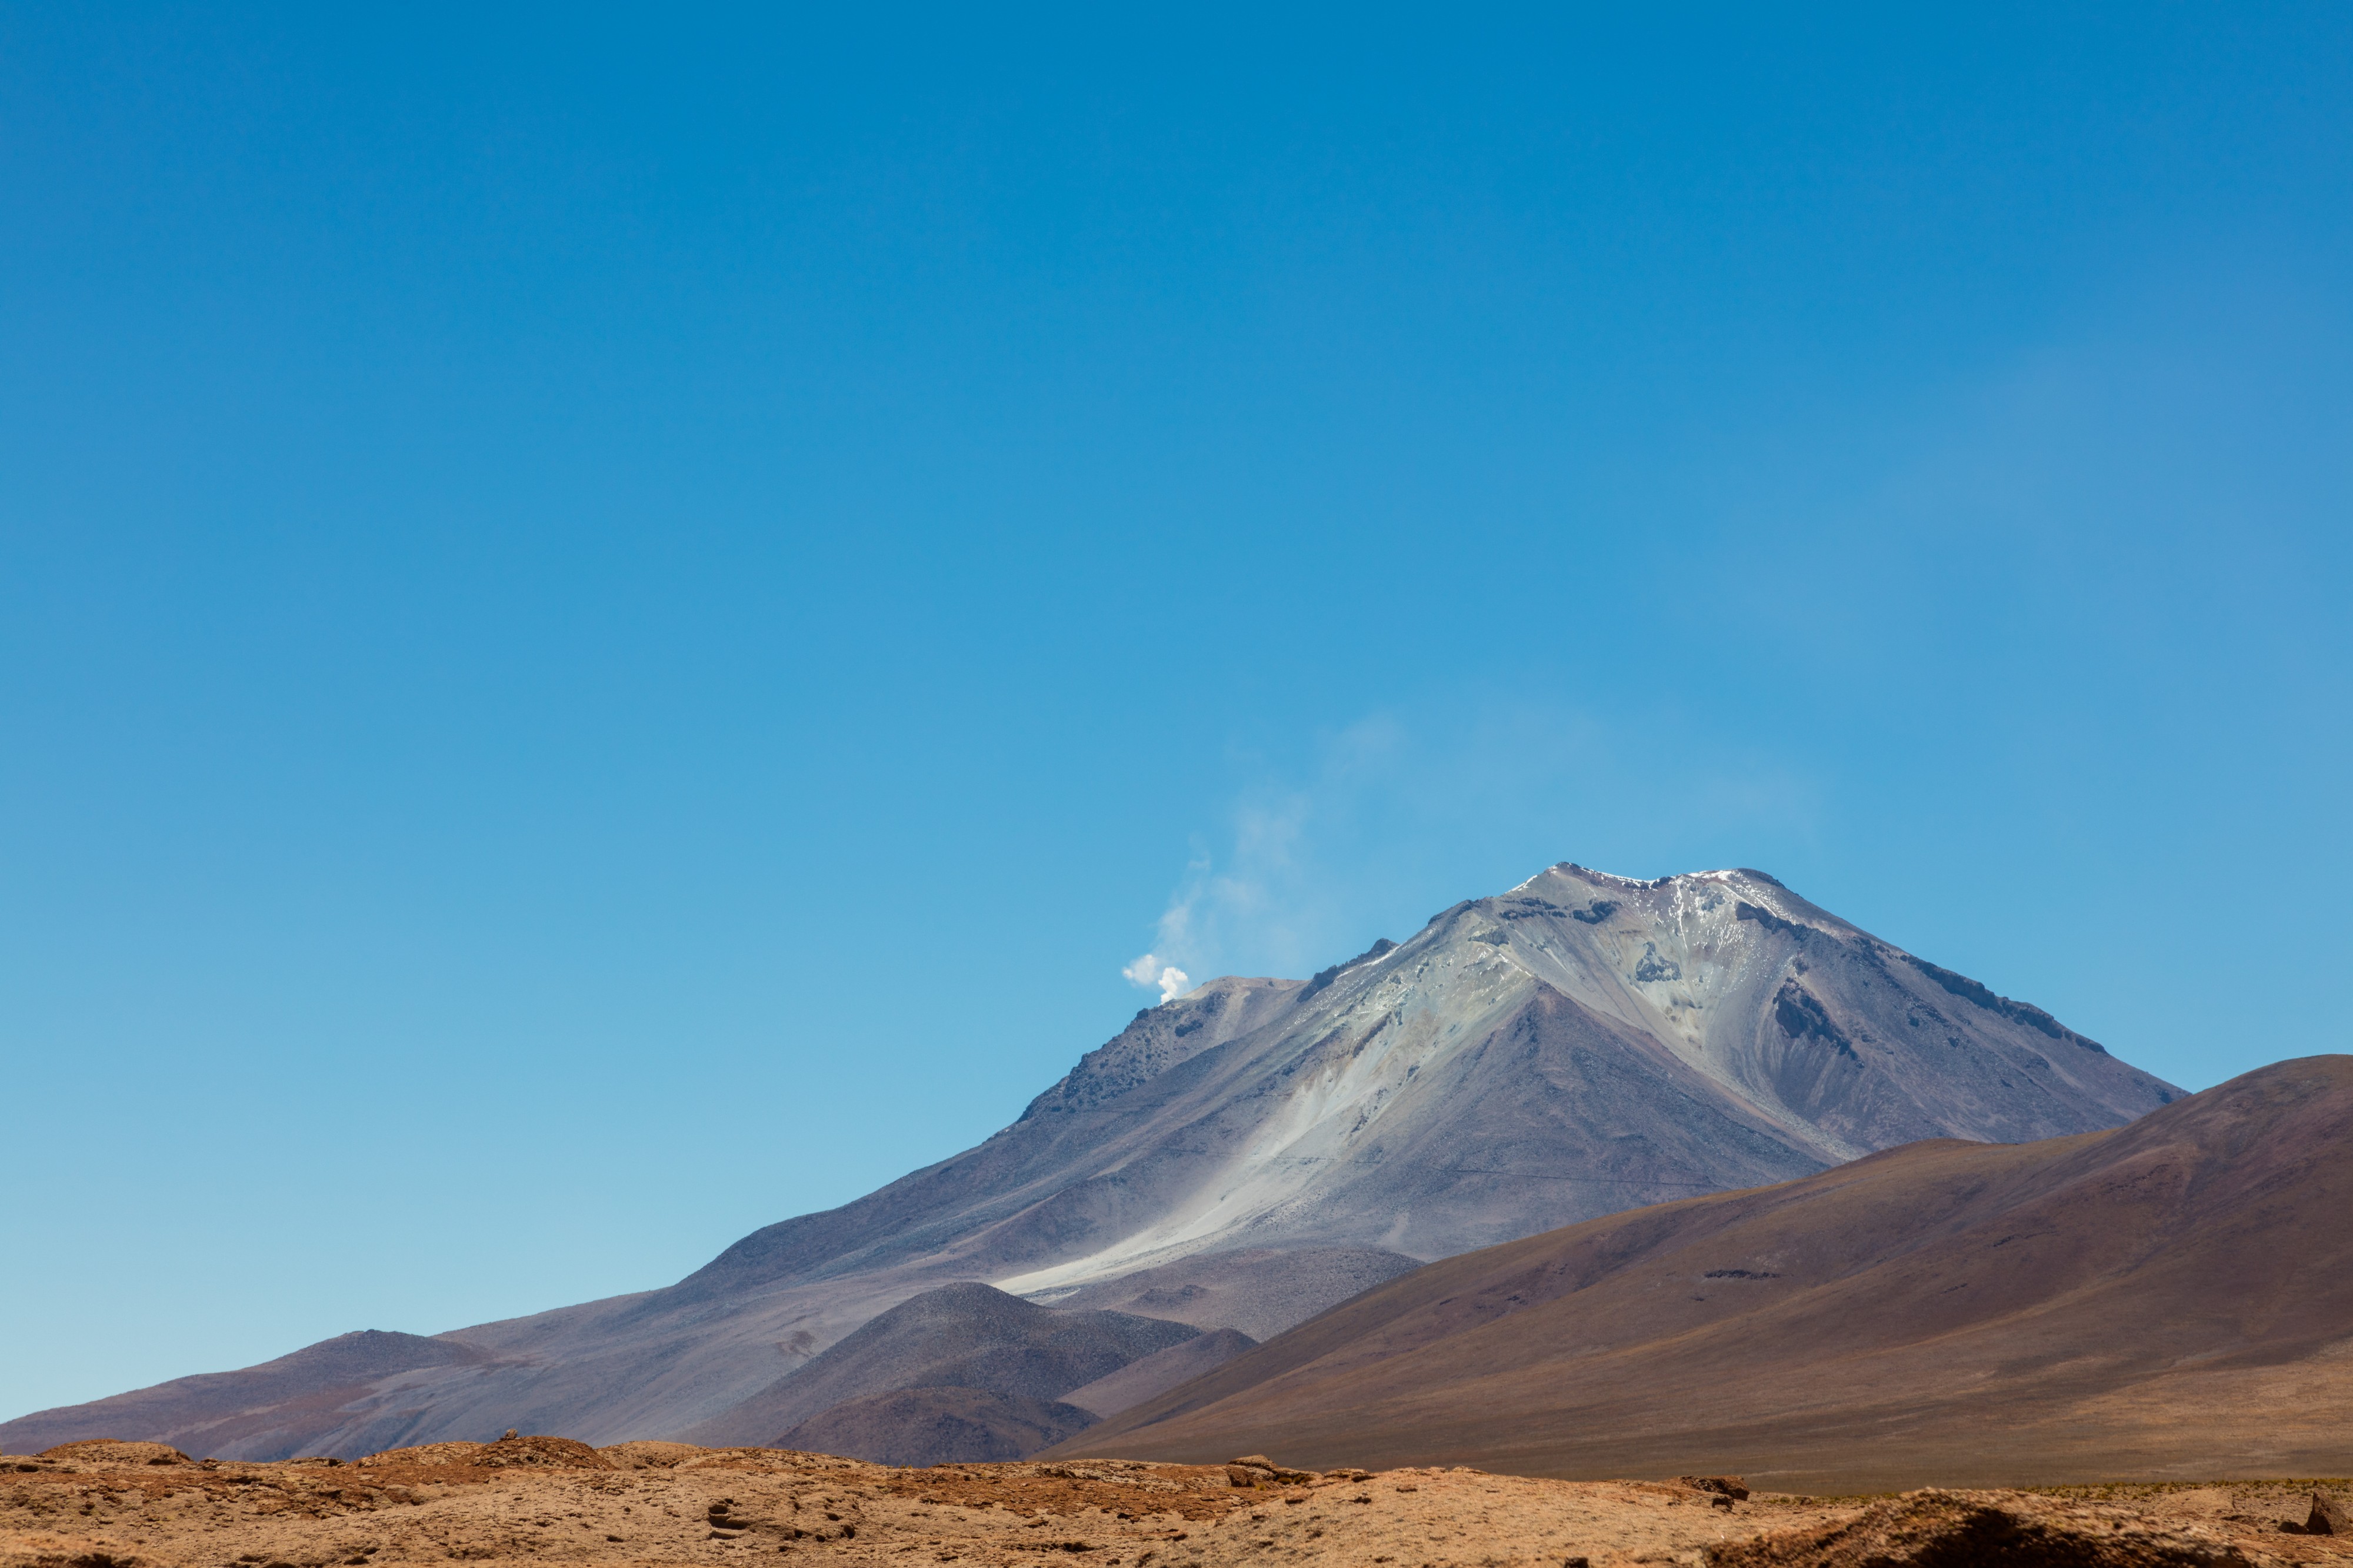 Volcán de Ollagüe, Bolivia, 2016-02-03, DD 91